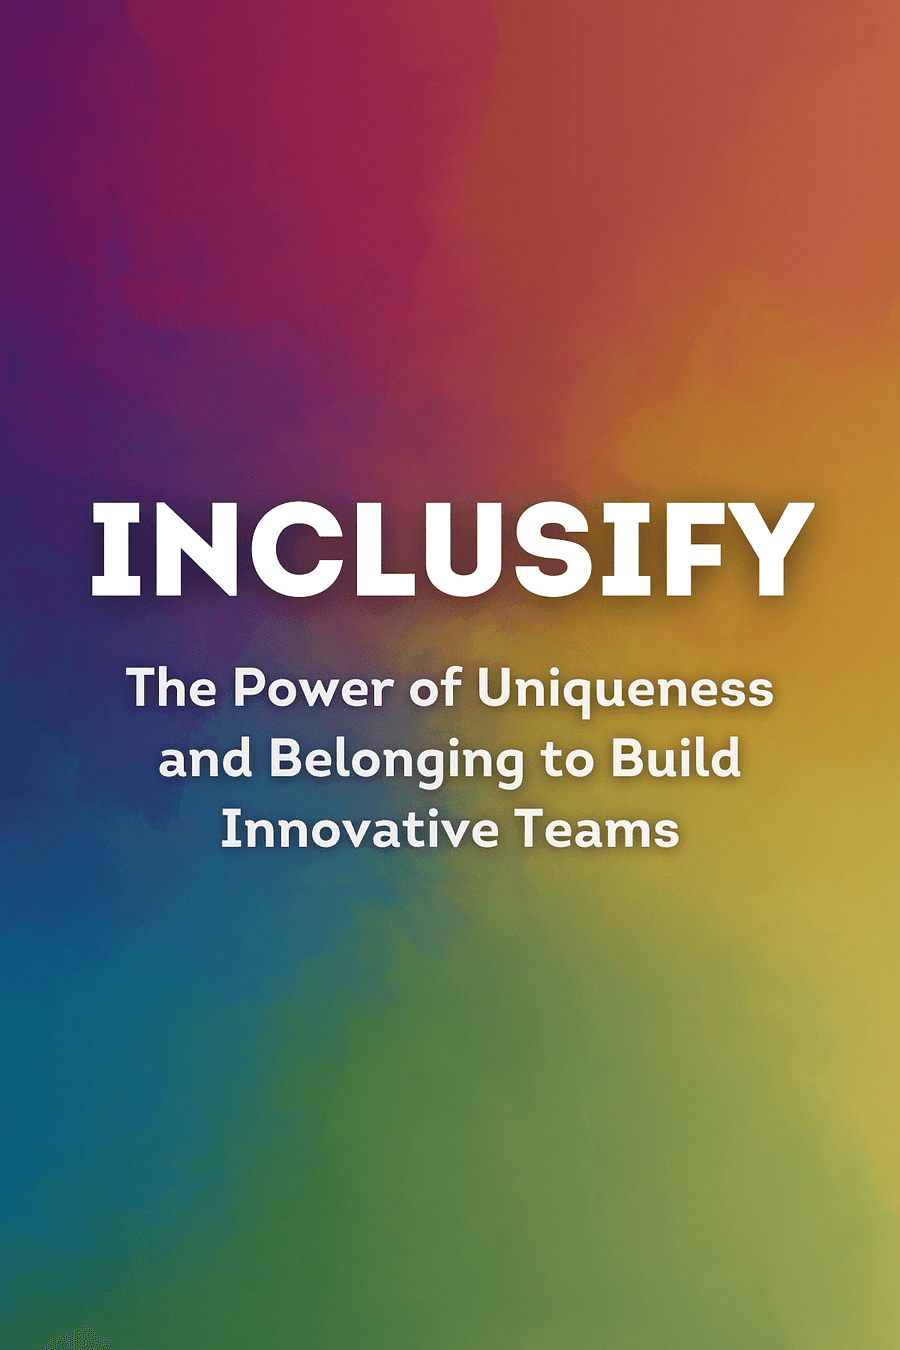 Inclusify by Stefanie K. Johnson - Book Summary